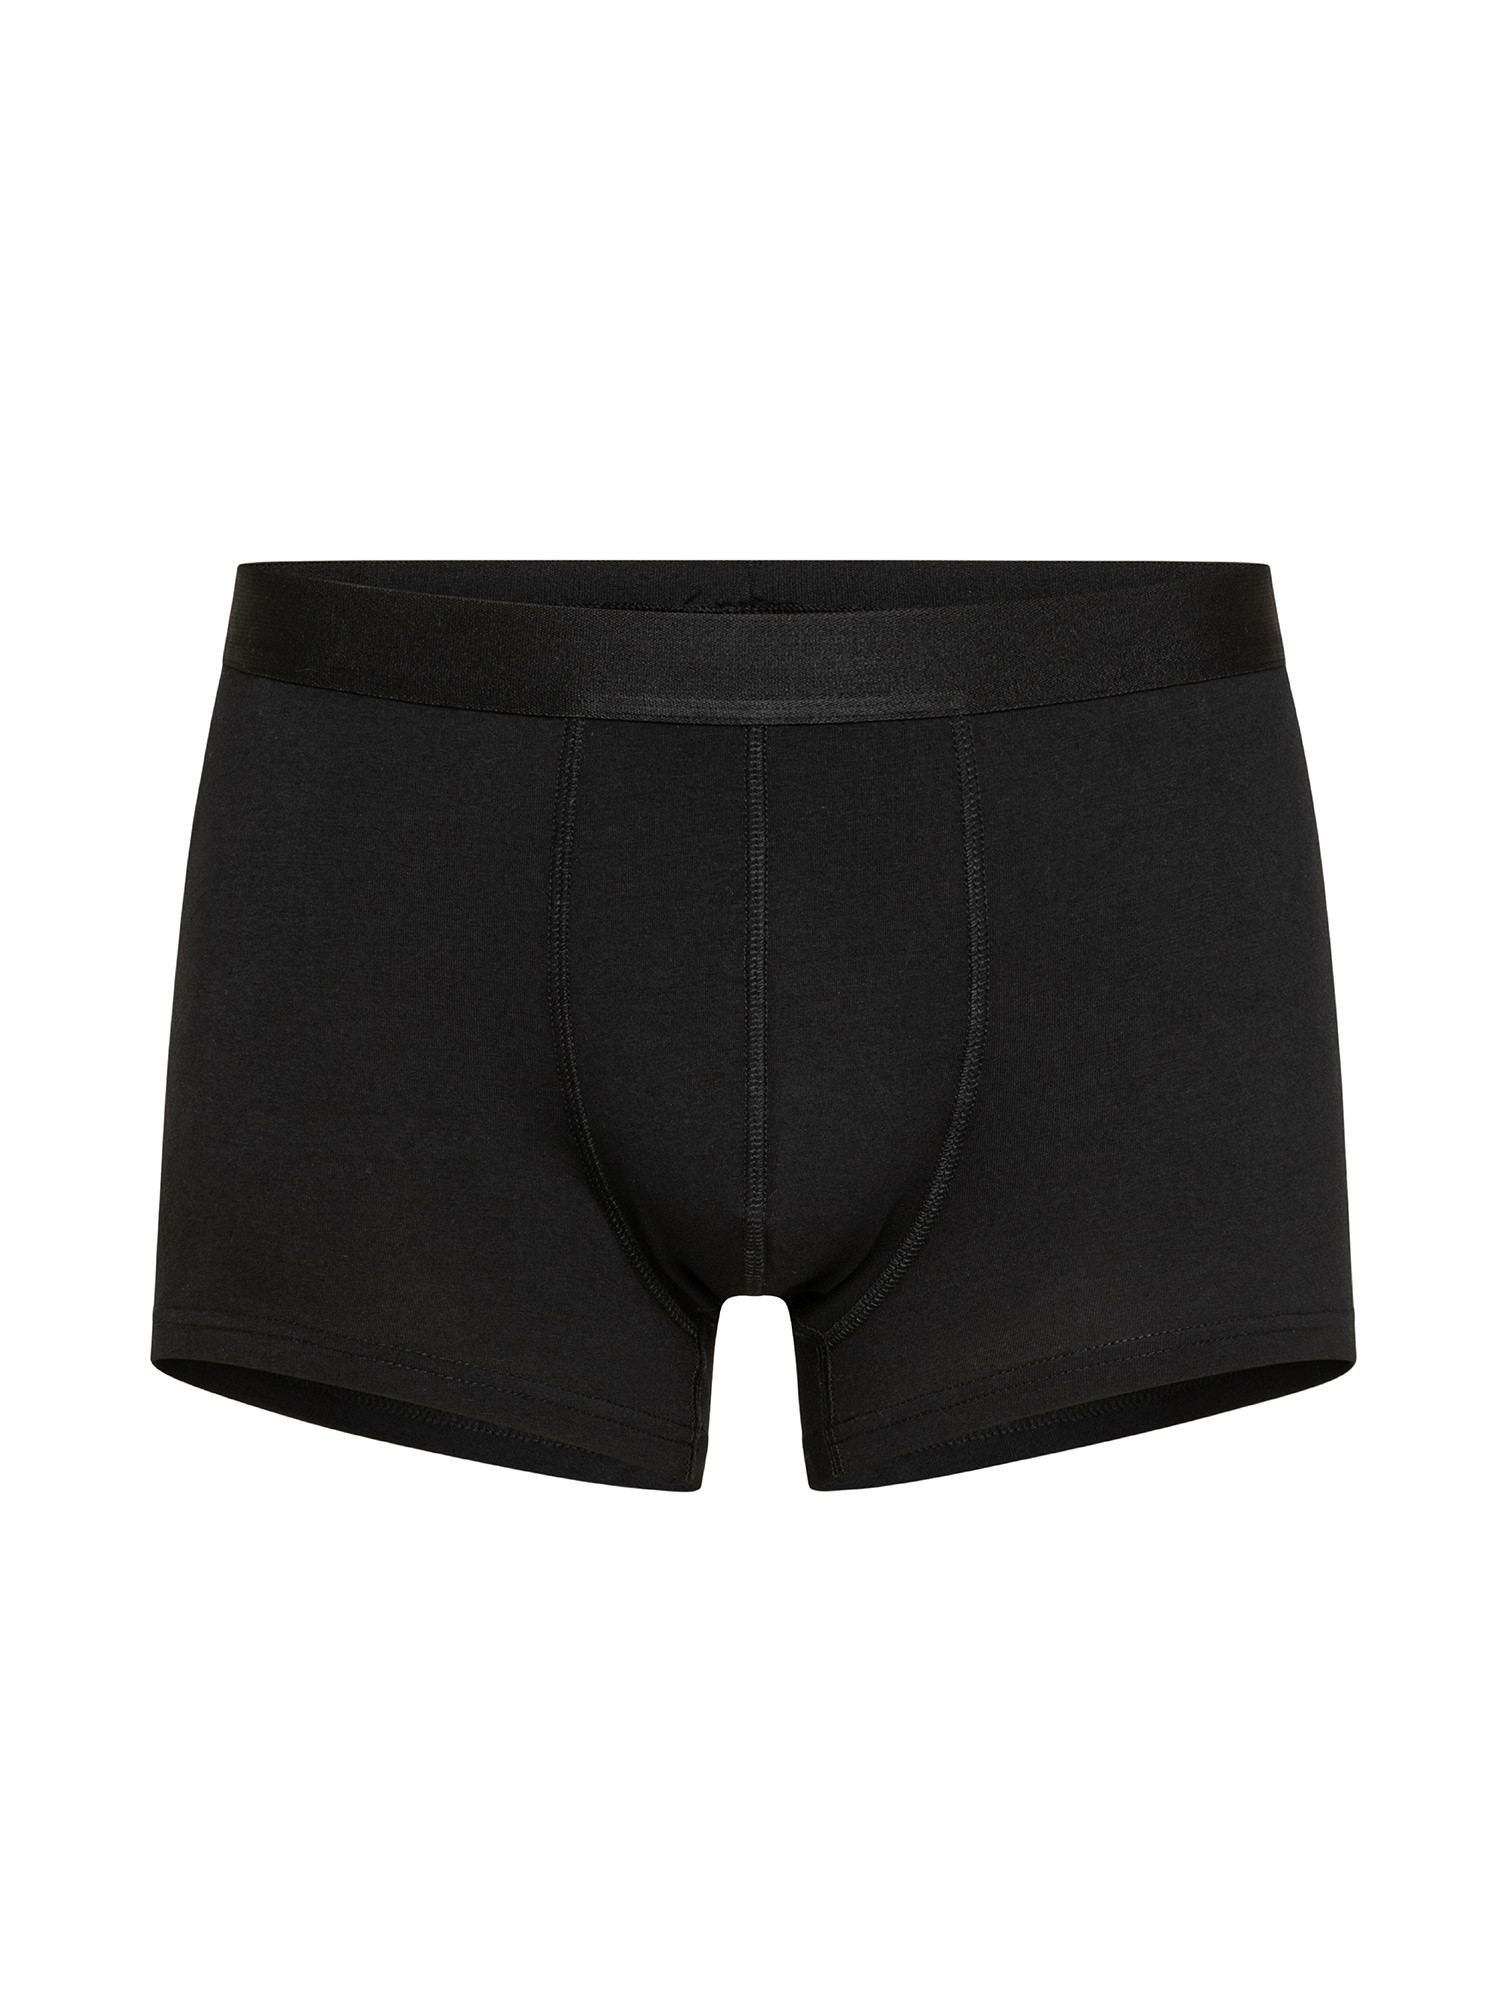 Luca D'Altieri - Set of 3 solid color organic cotton boxers, Black, large image number 0